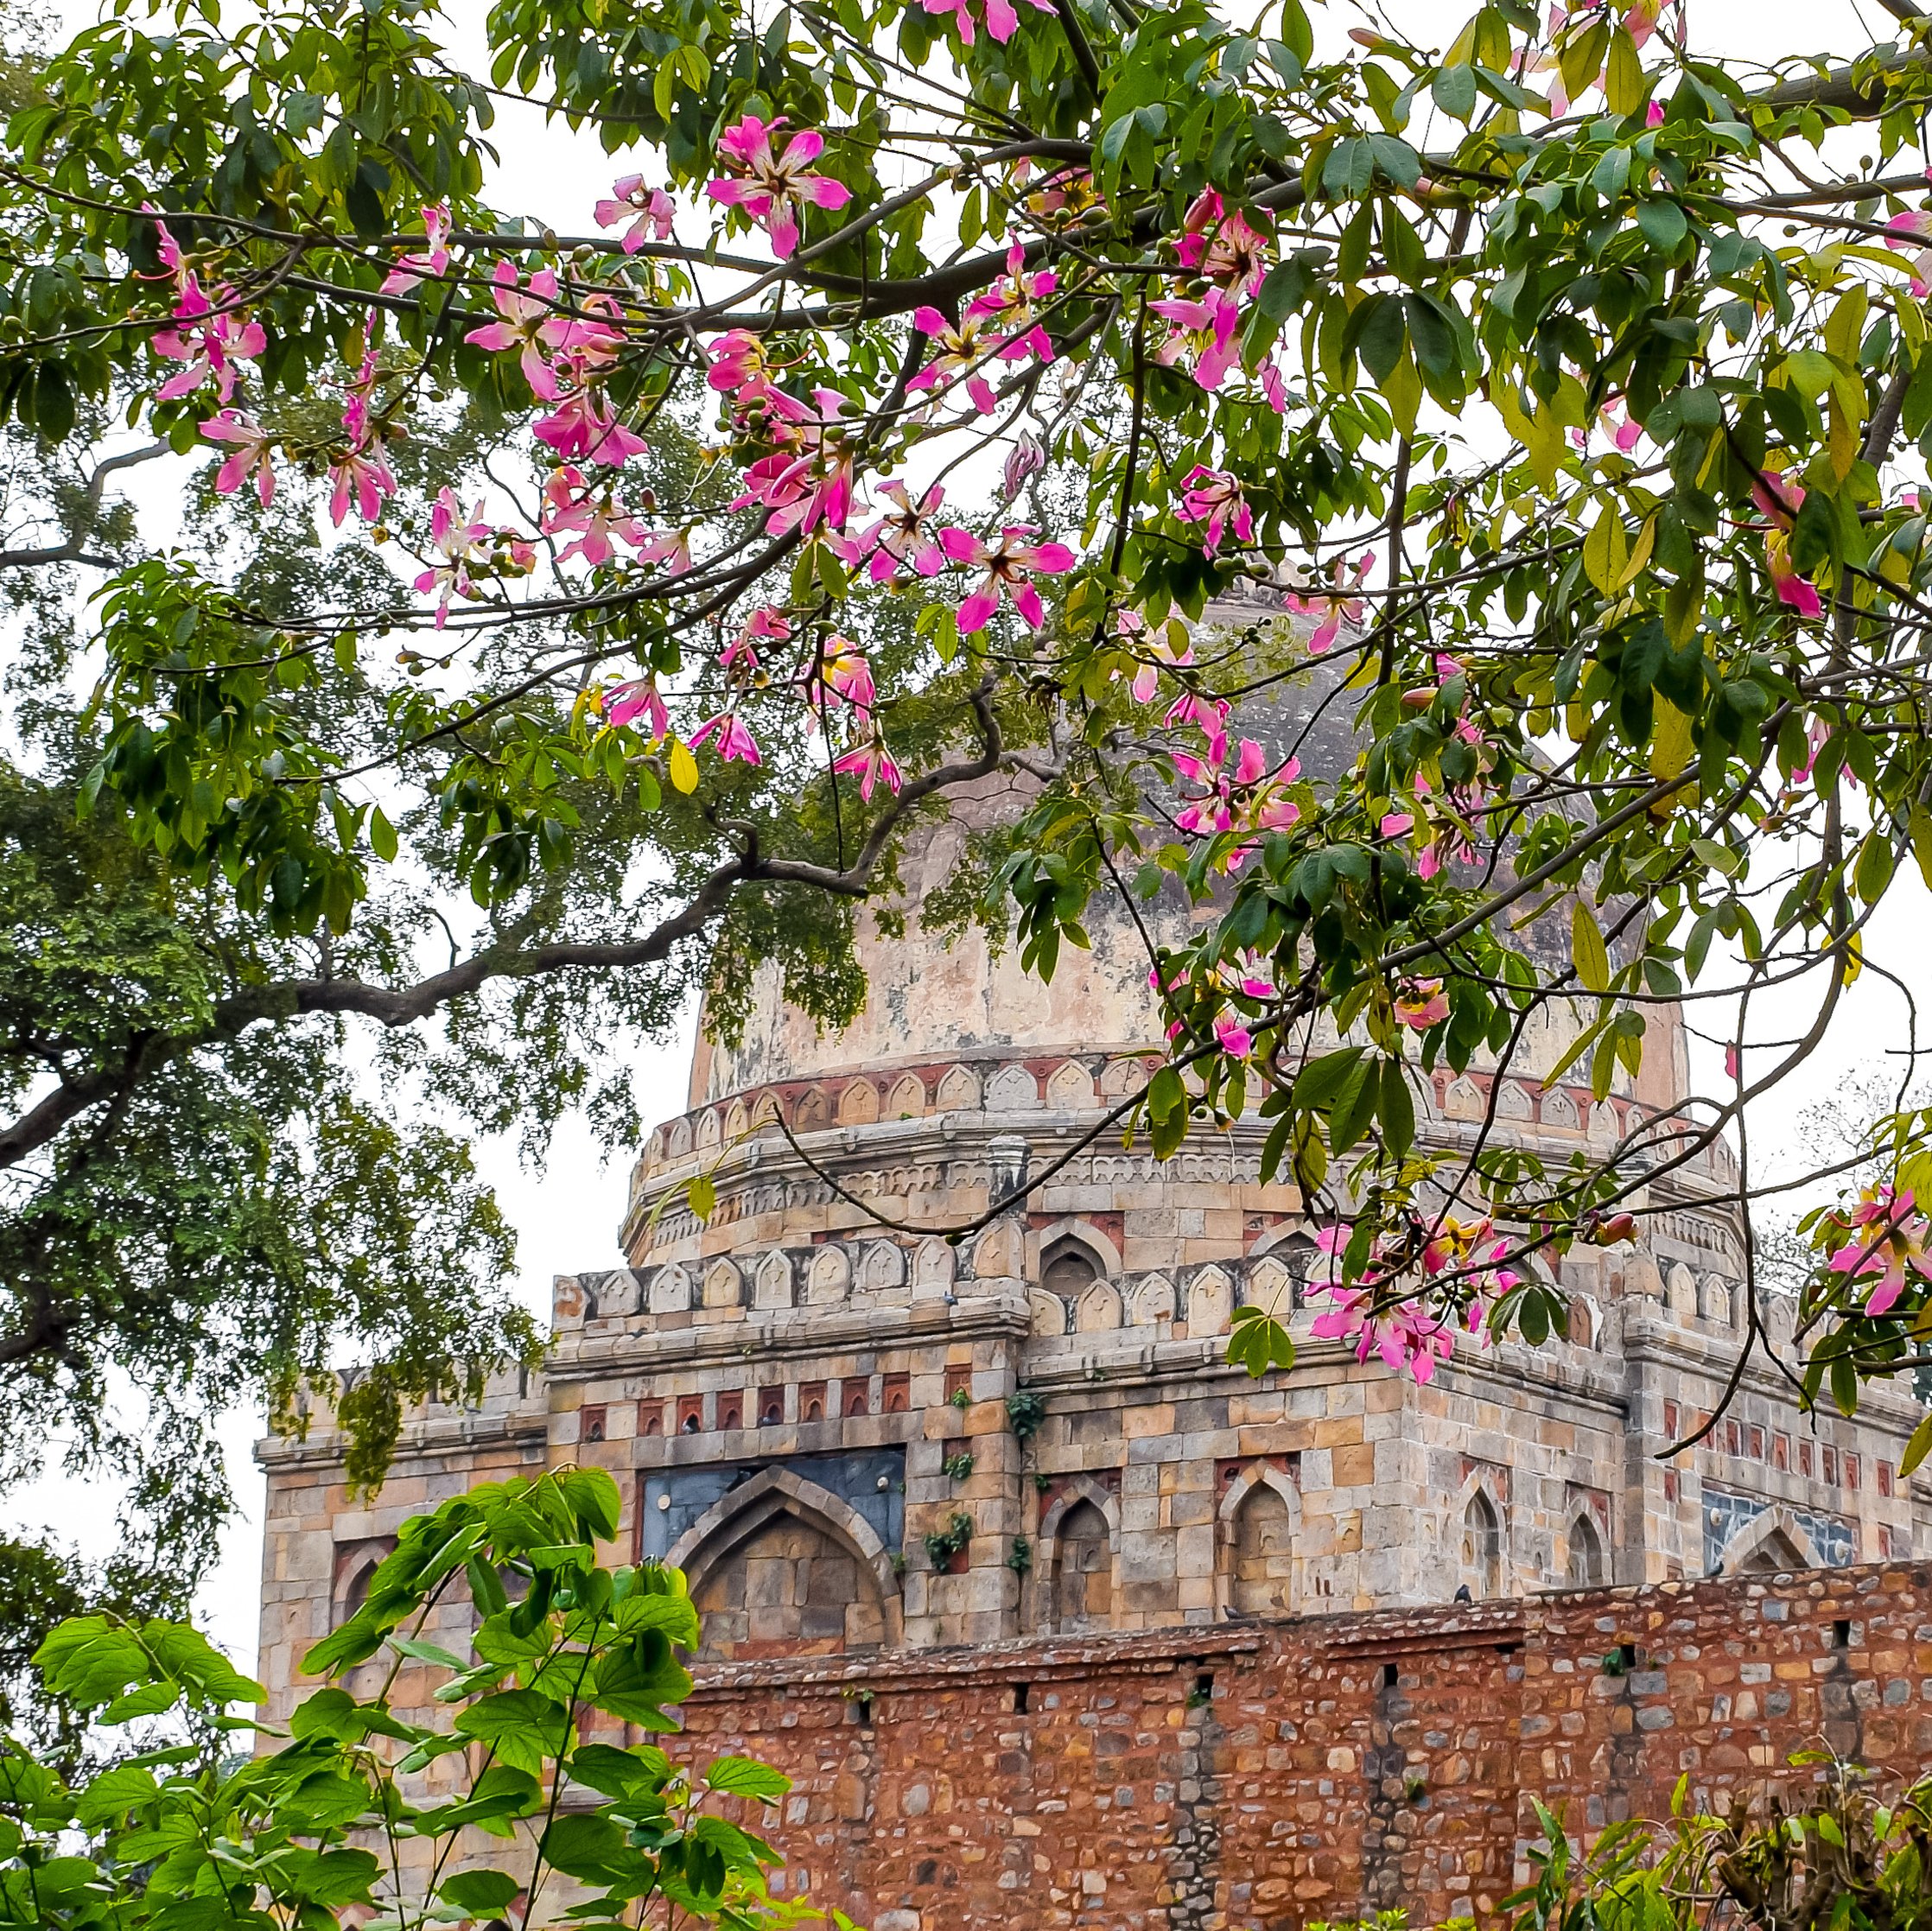 Mughal Architecture inside Lodhi Gardens